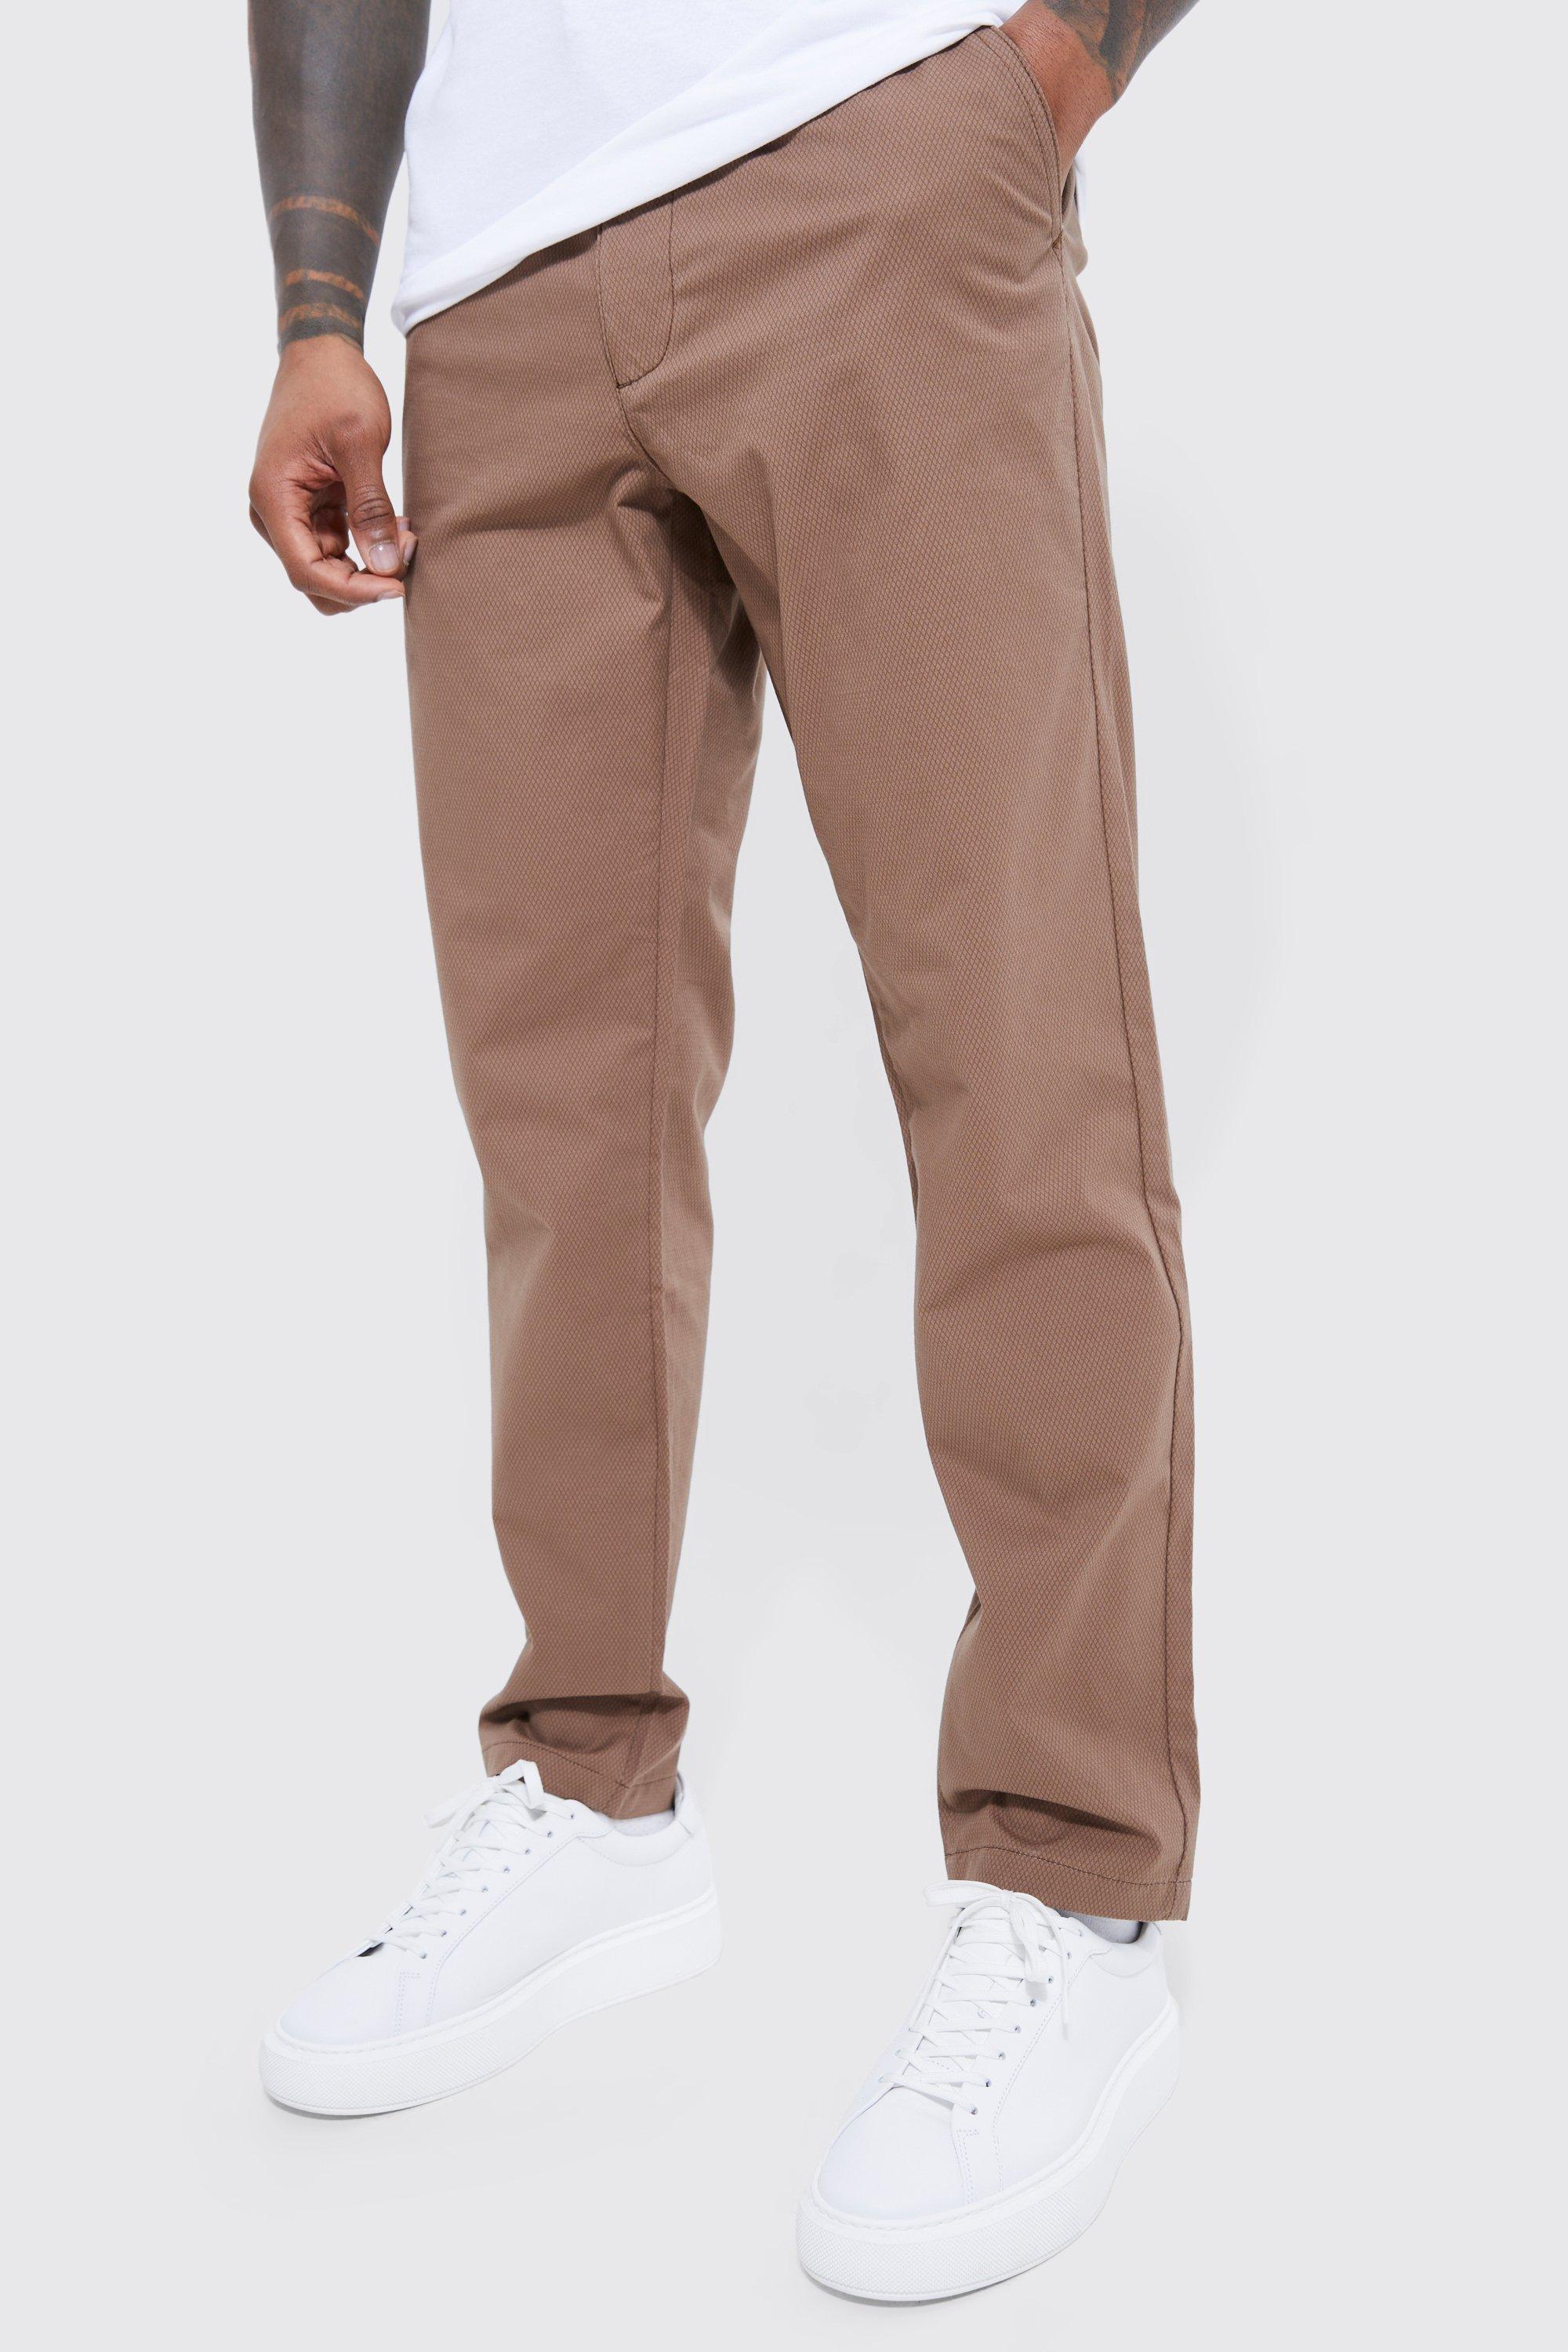 pantalon chino slim texturé homme - brun - 30, brun